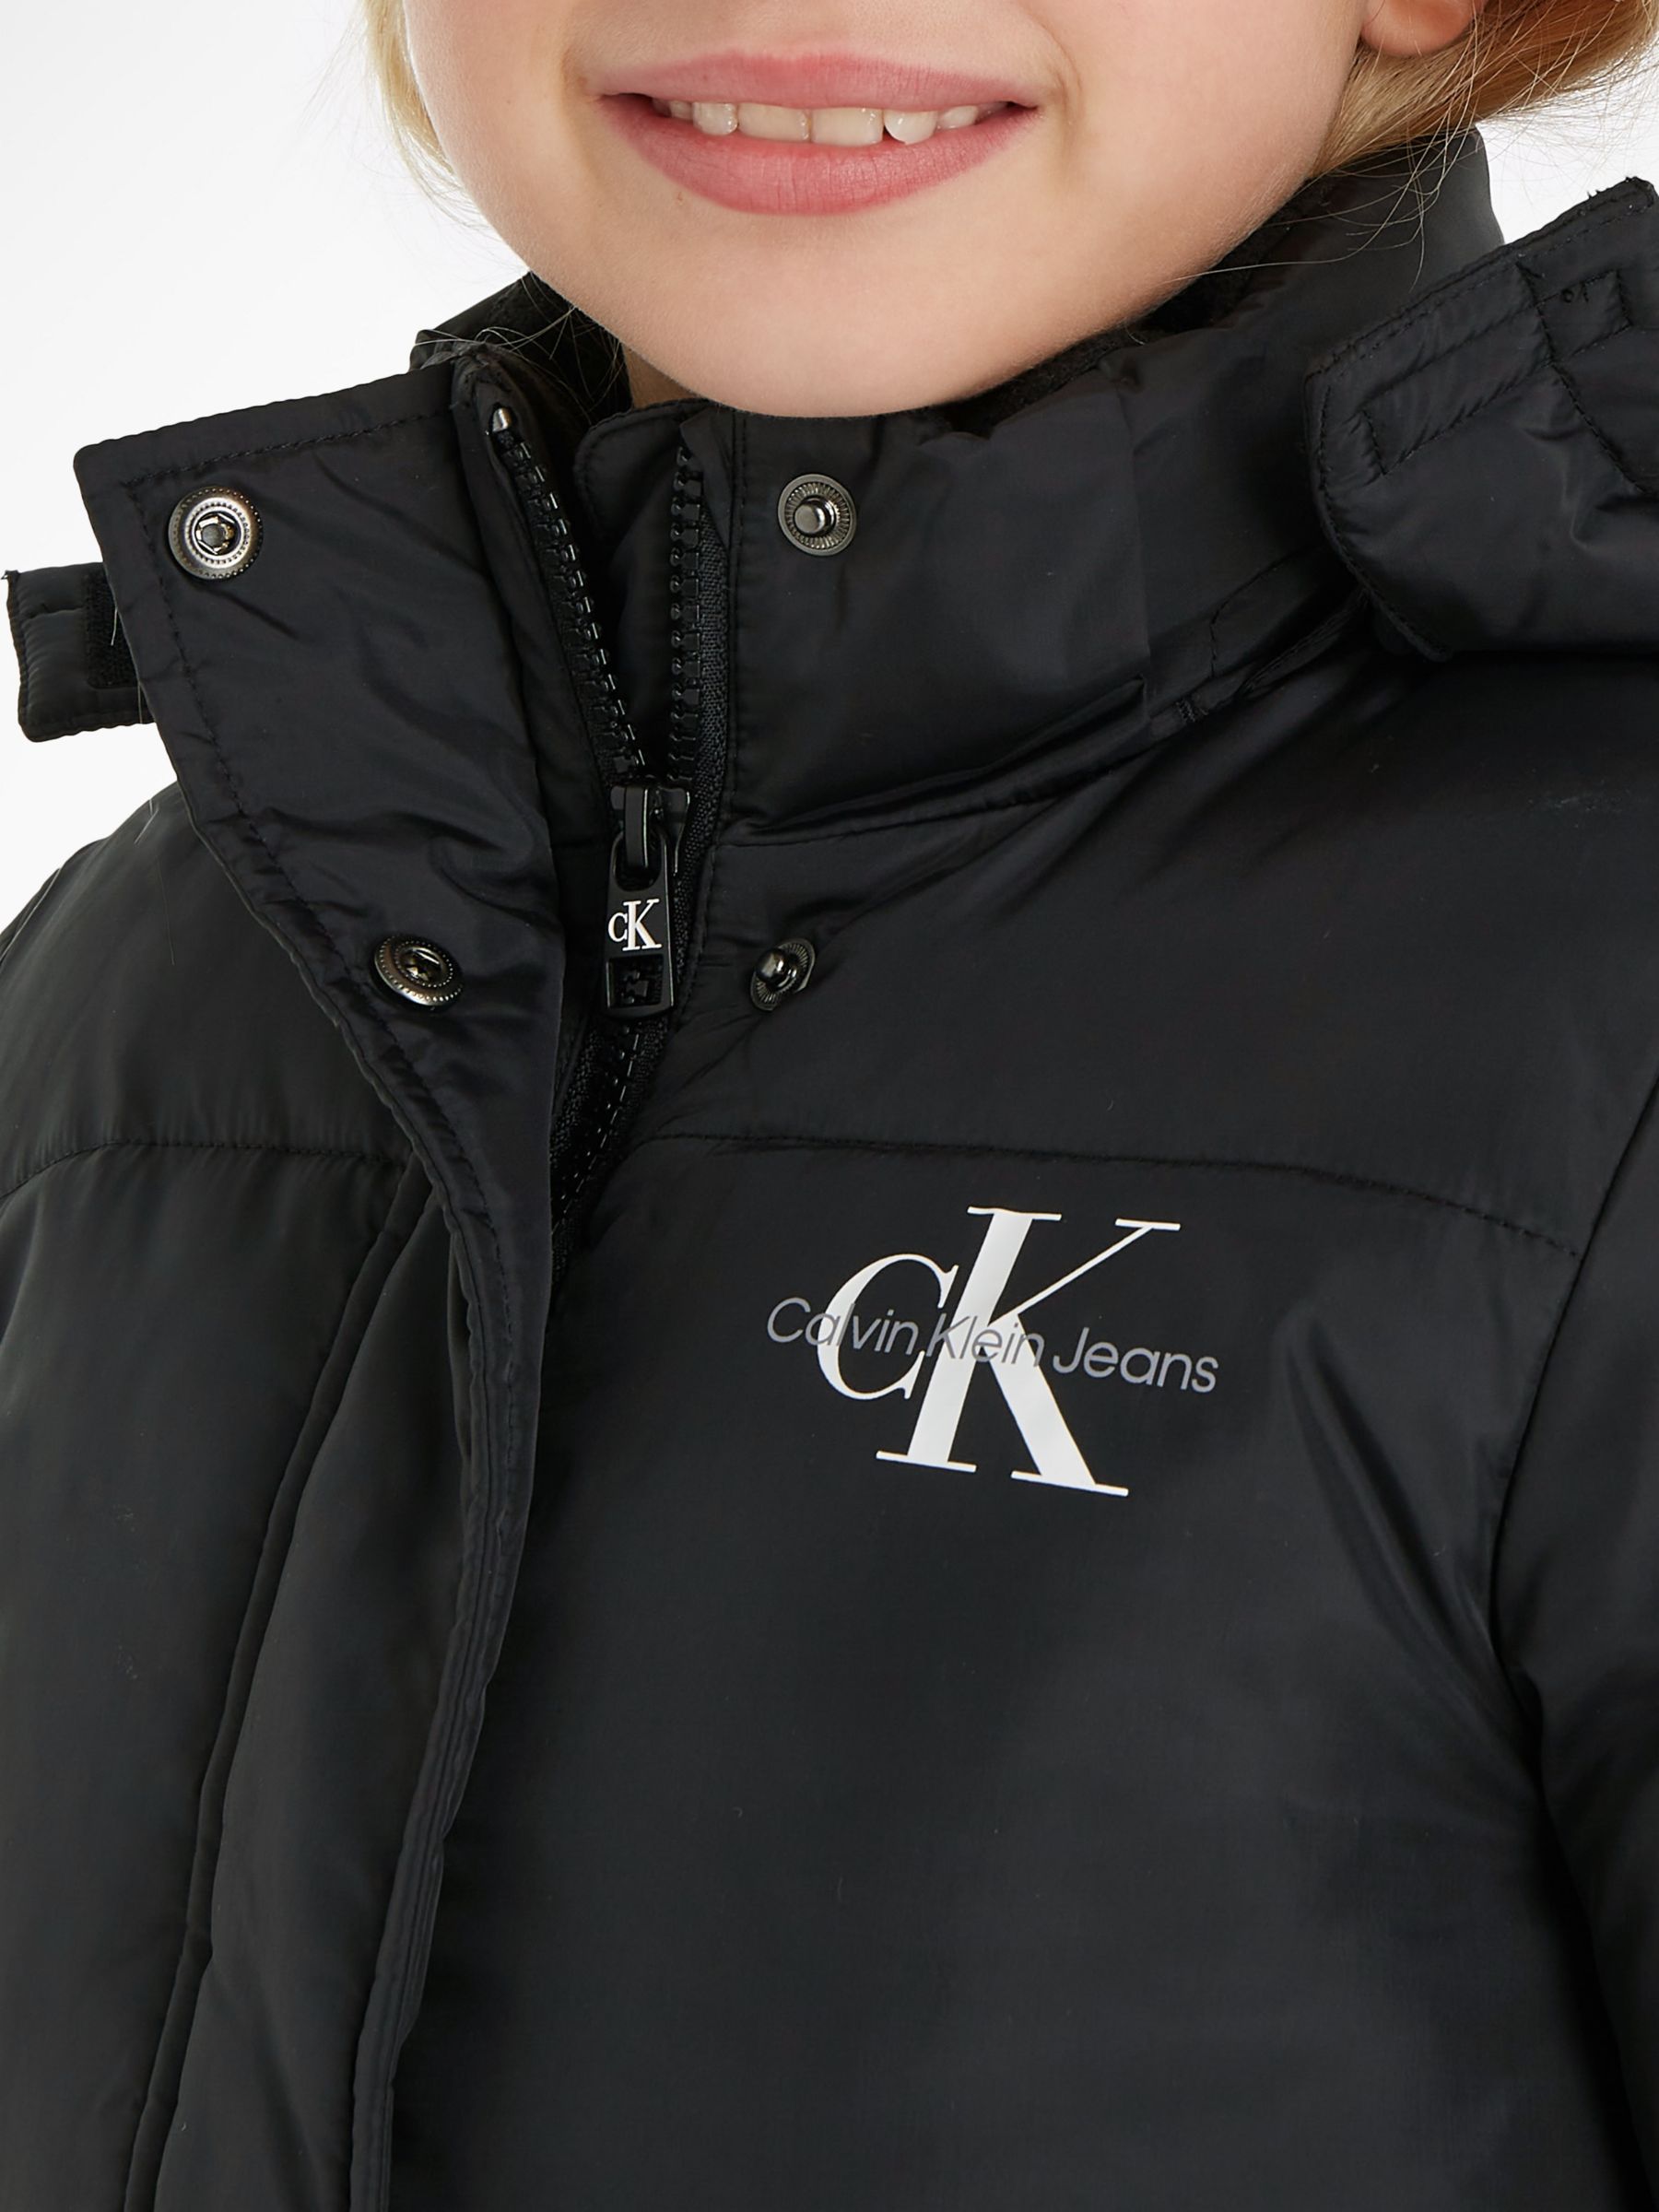 Calvin Klein Kids' Puffer Jacket, Black, 10 years